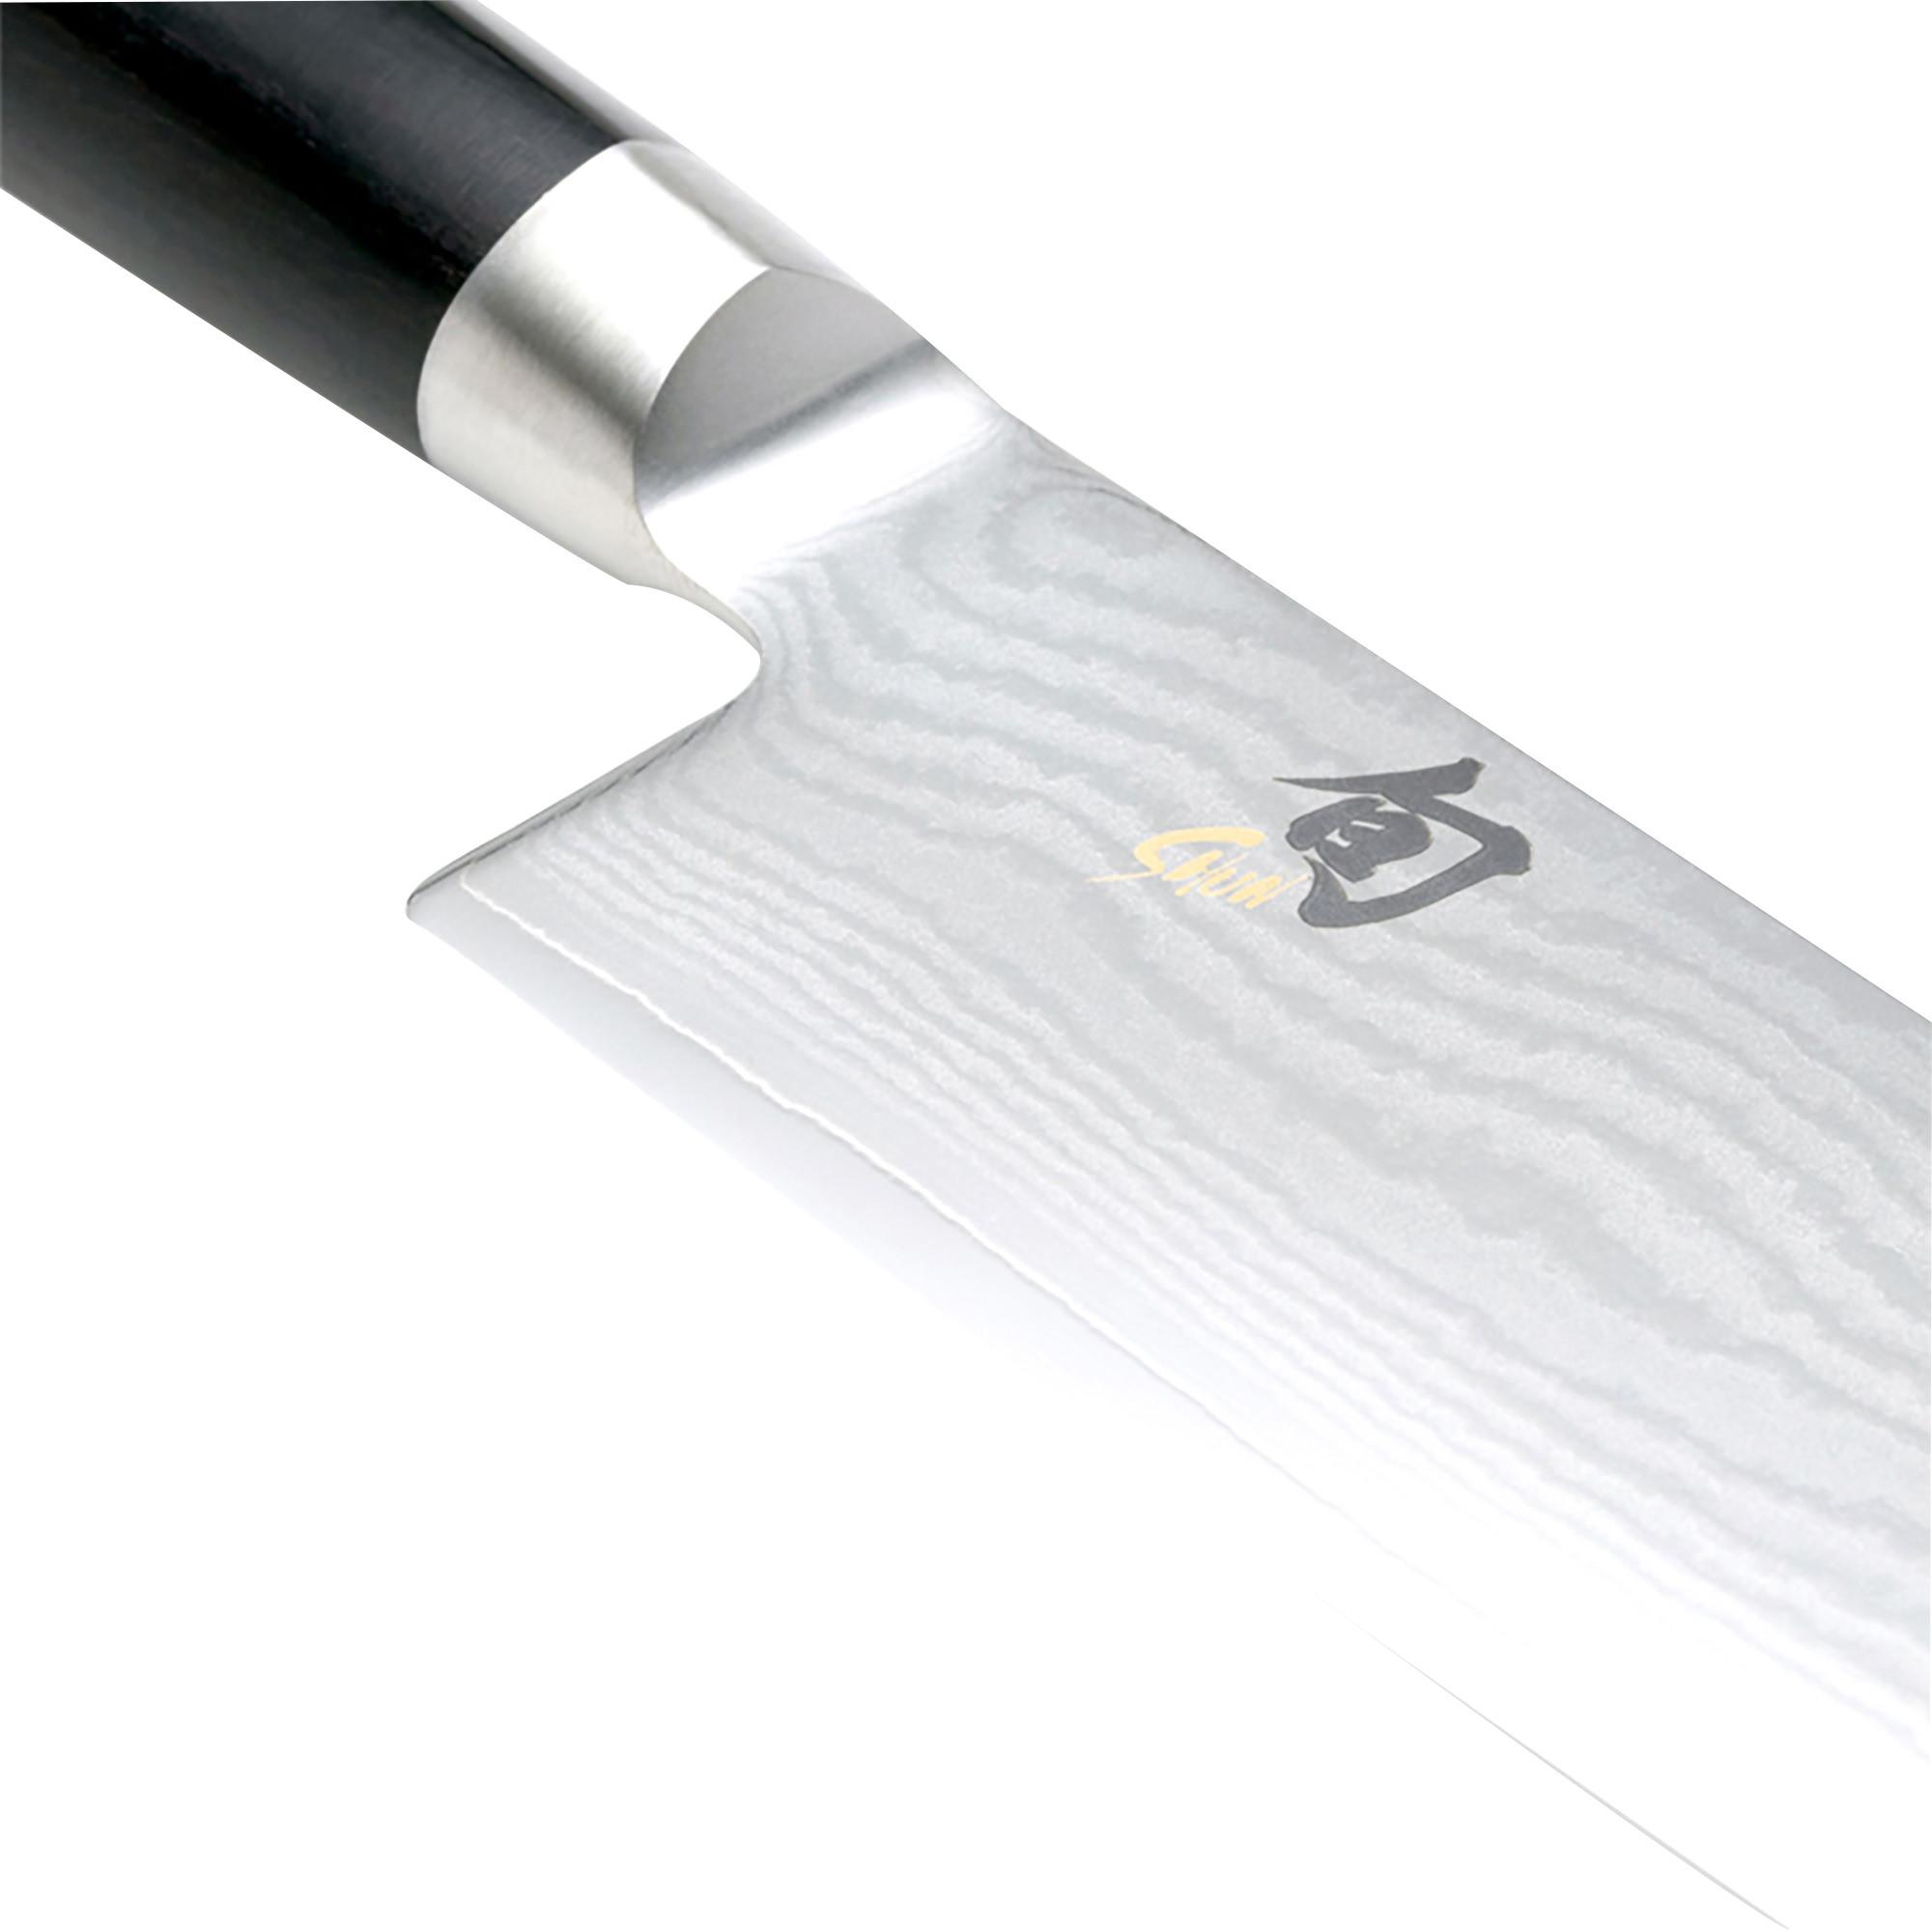 Shun Classic Santoku Knife 16.5cm Image 2